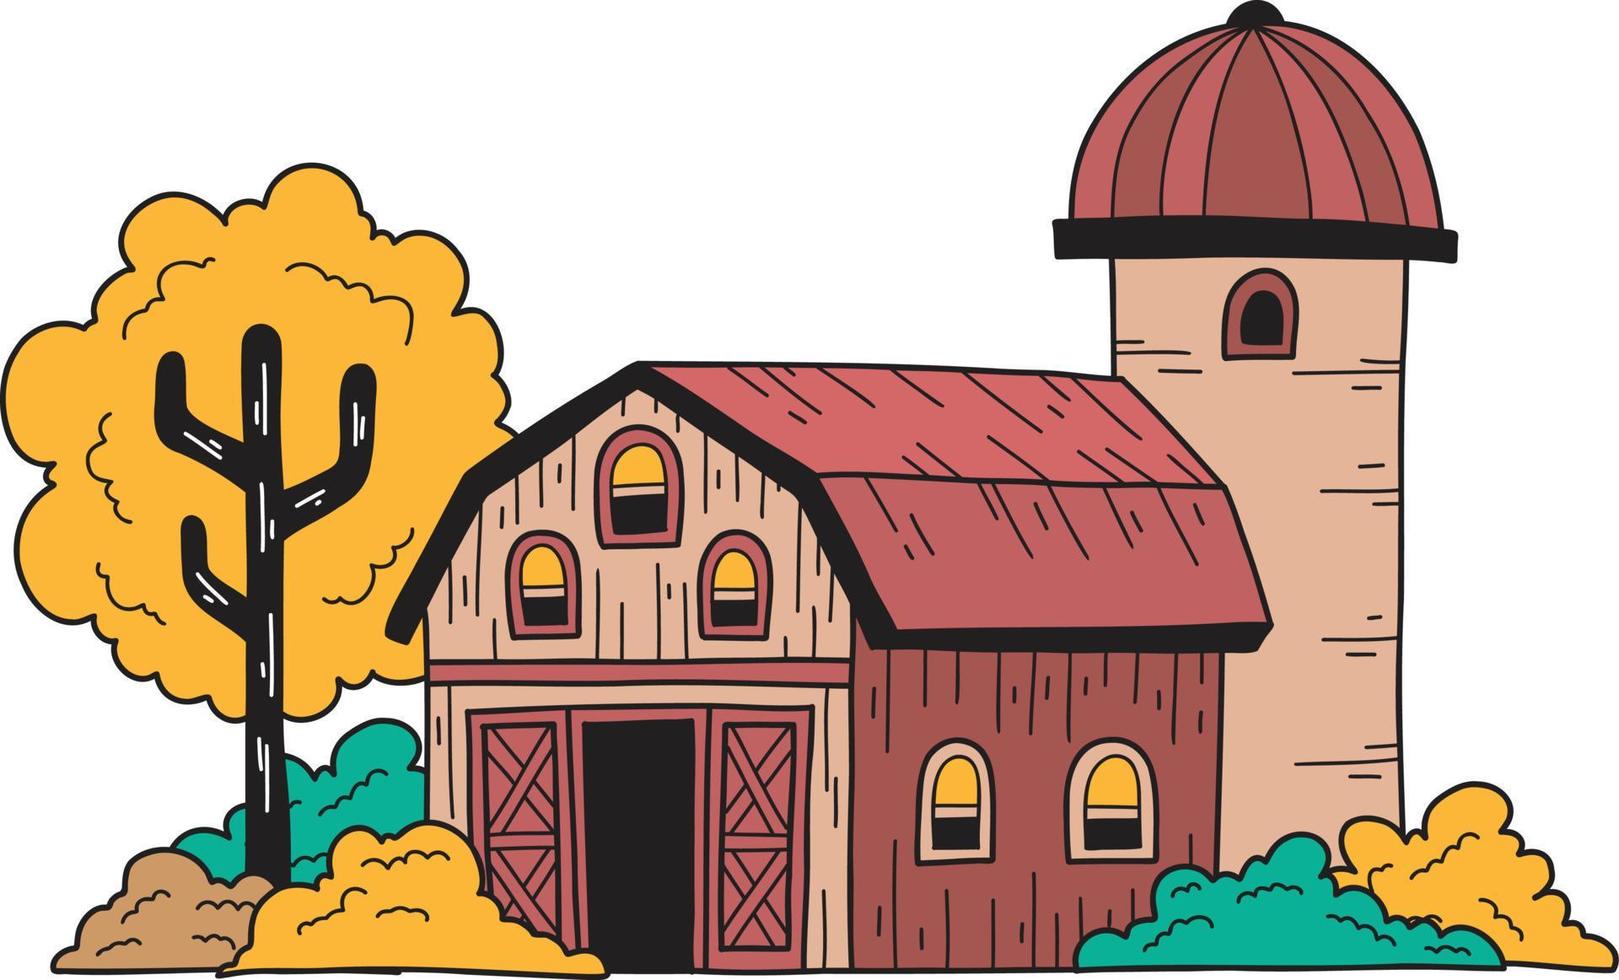 Hand Drawn farm and barn illustration vector